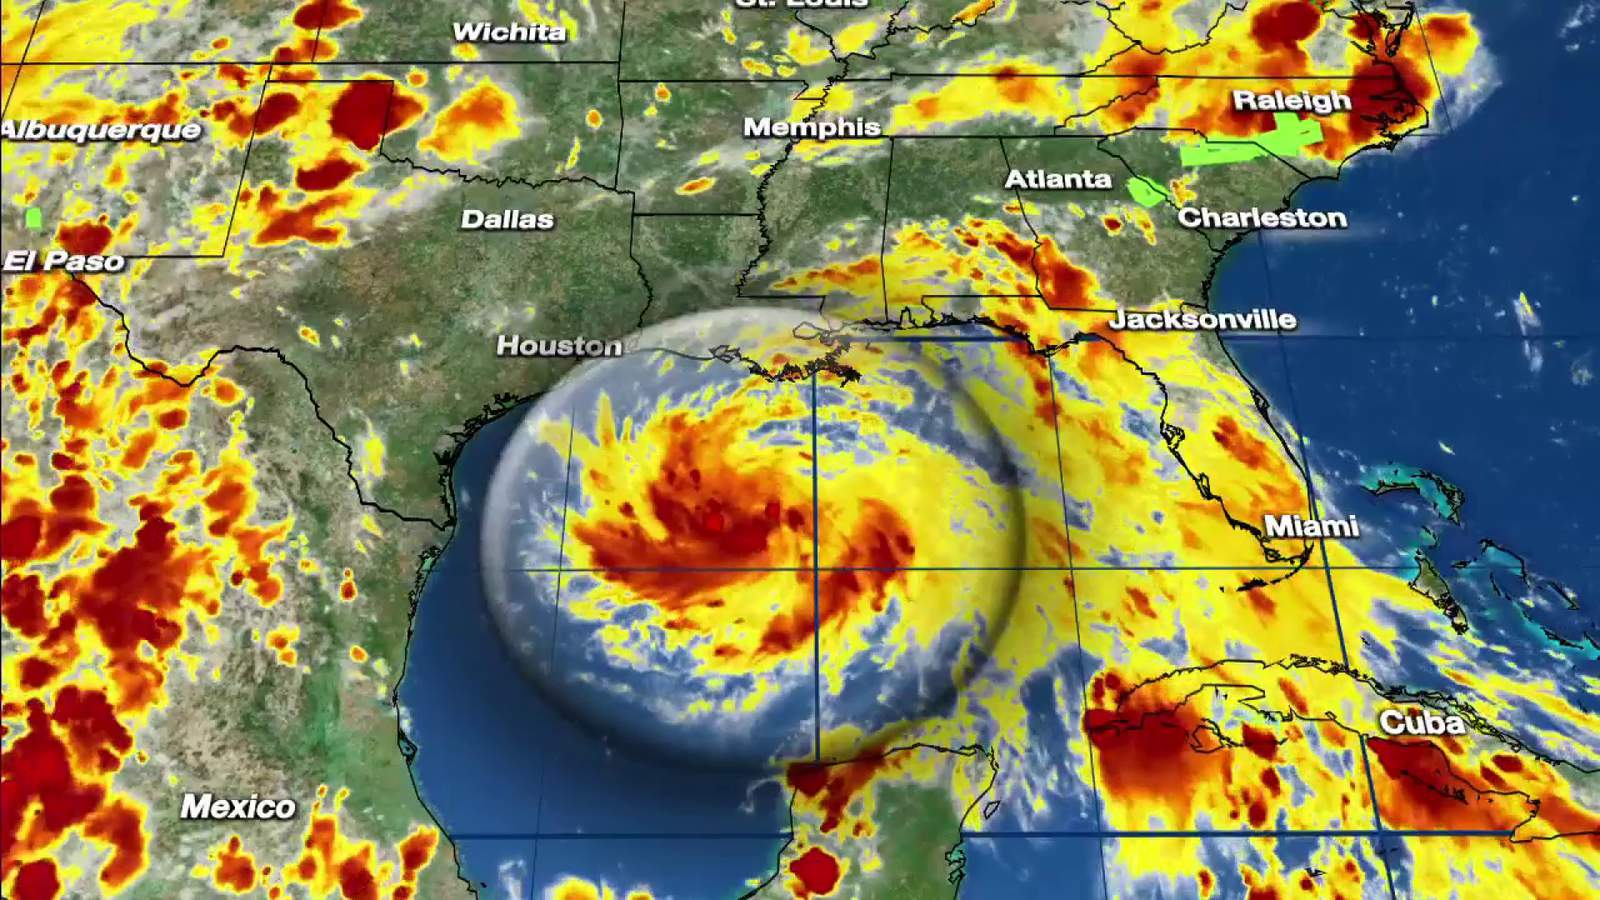 Watch Tropical Storm Hanna approach with live webcams along Texas coast